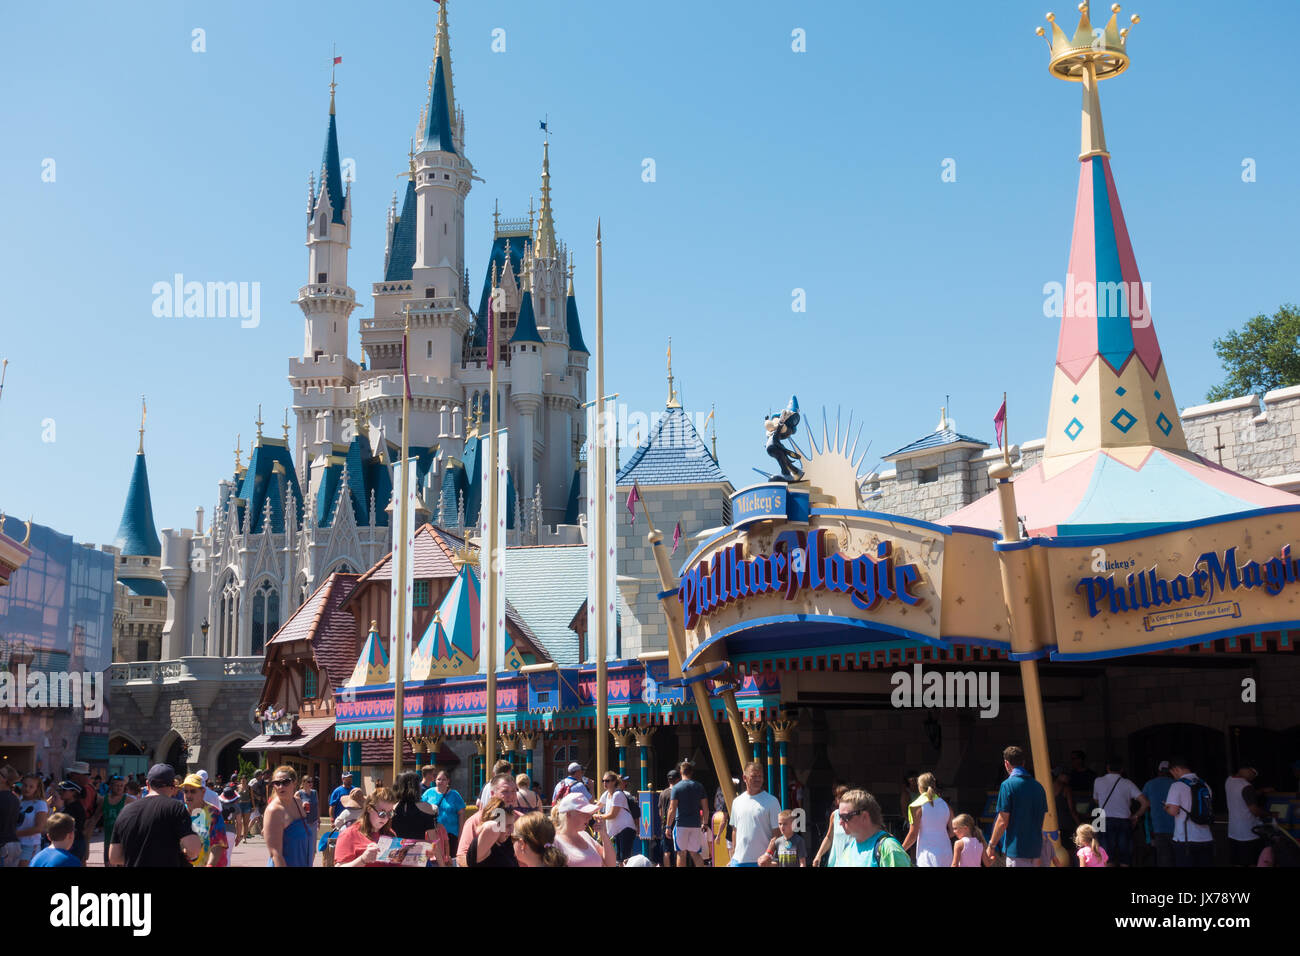 Eingang zu Mickeys philharmagic Show im Fantasyland, Magic Kingdom, Orlando, Florida. Stockfoto